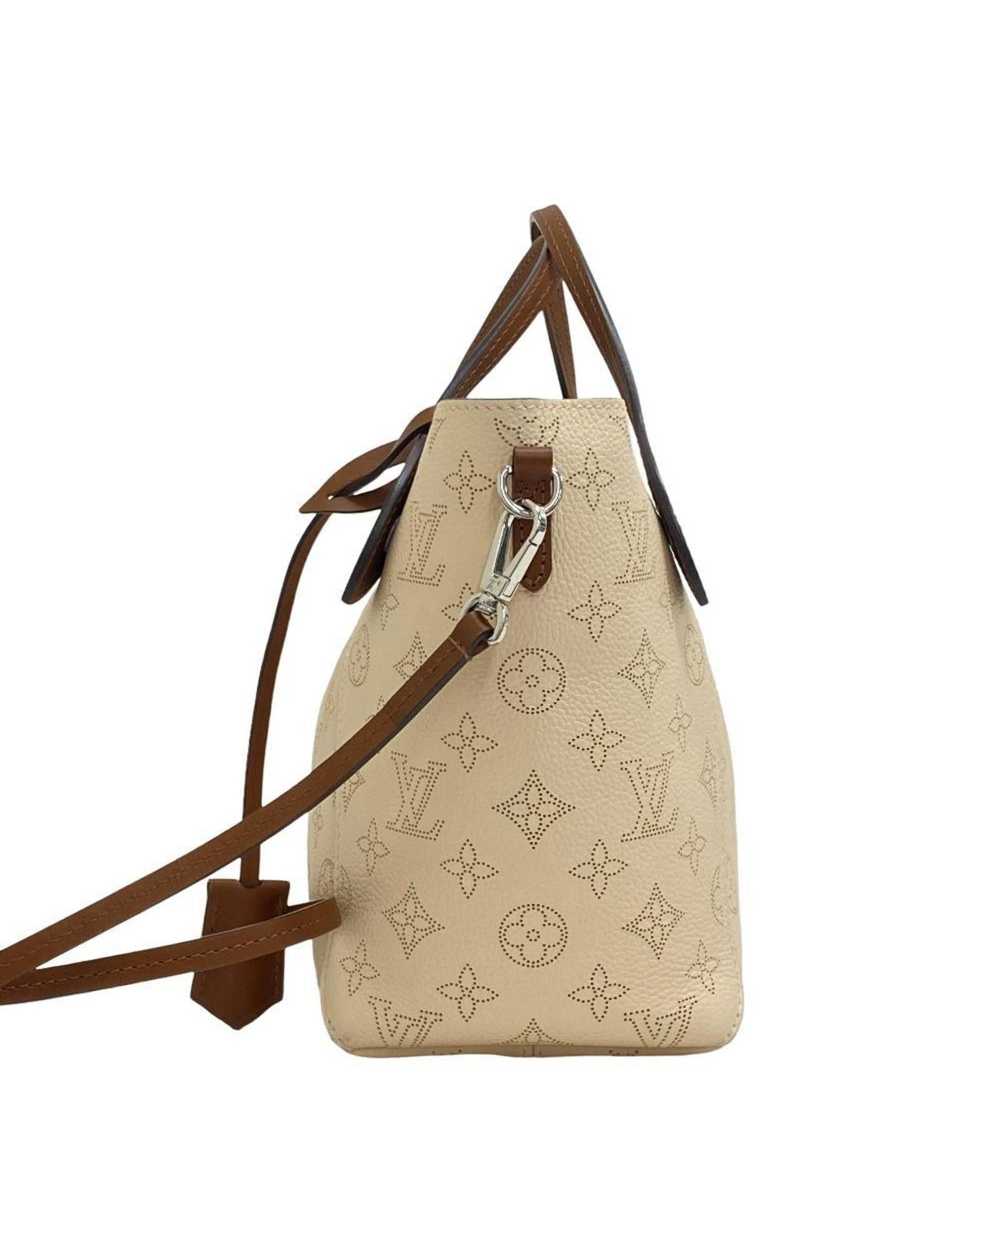 Louis Vuitton Elegant Beige Leather 2-Way Bag wit… - image 3